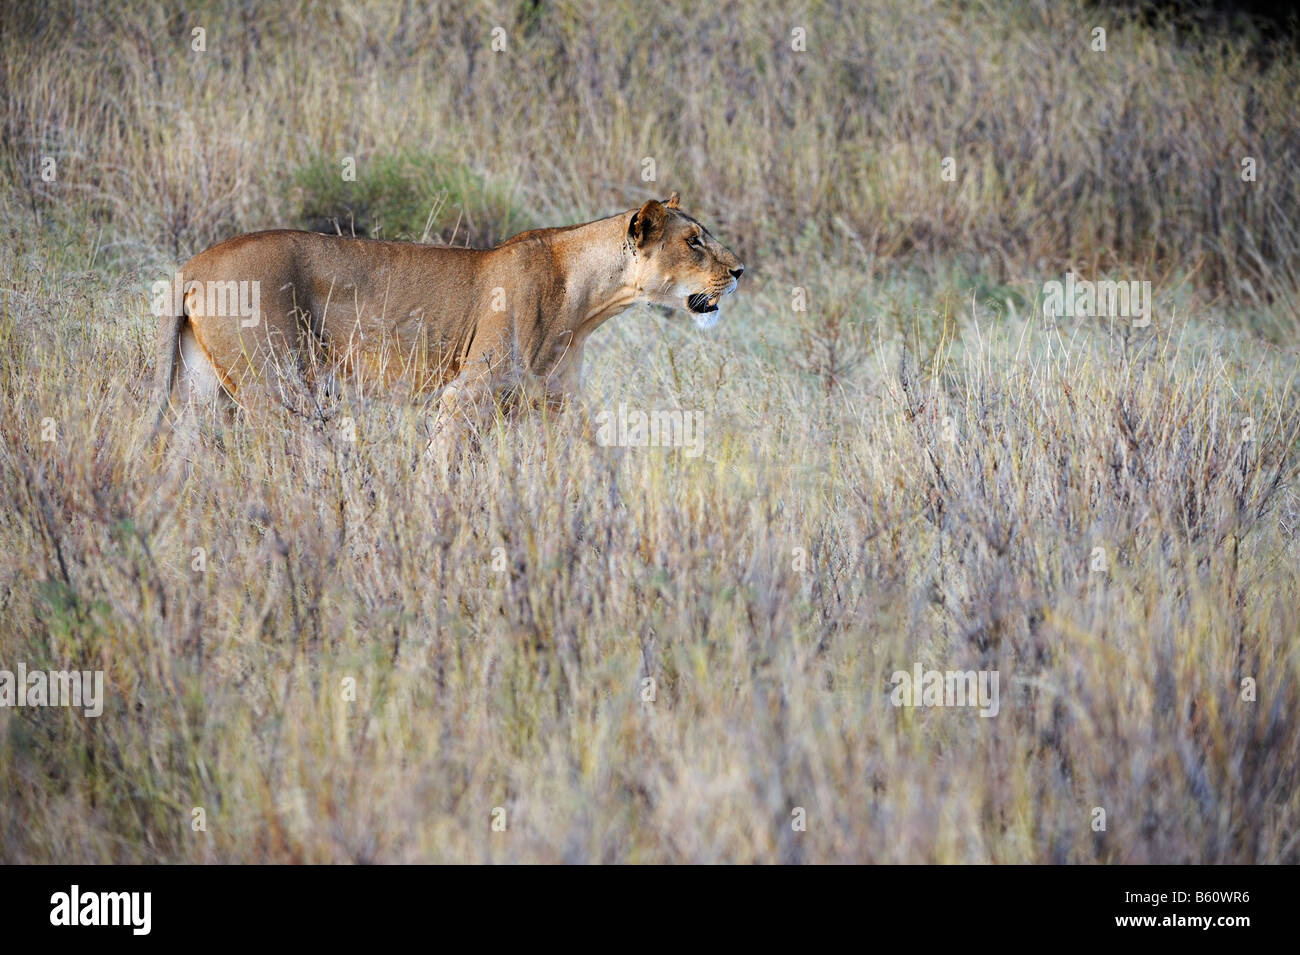 Lion (Panthera leo), Samburu National Reserve, Kenya, Africa Stock Photo